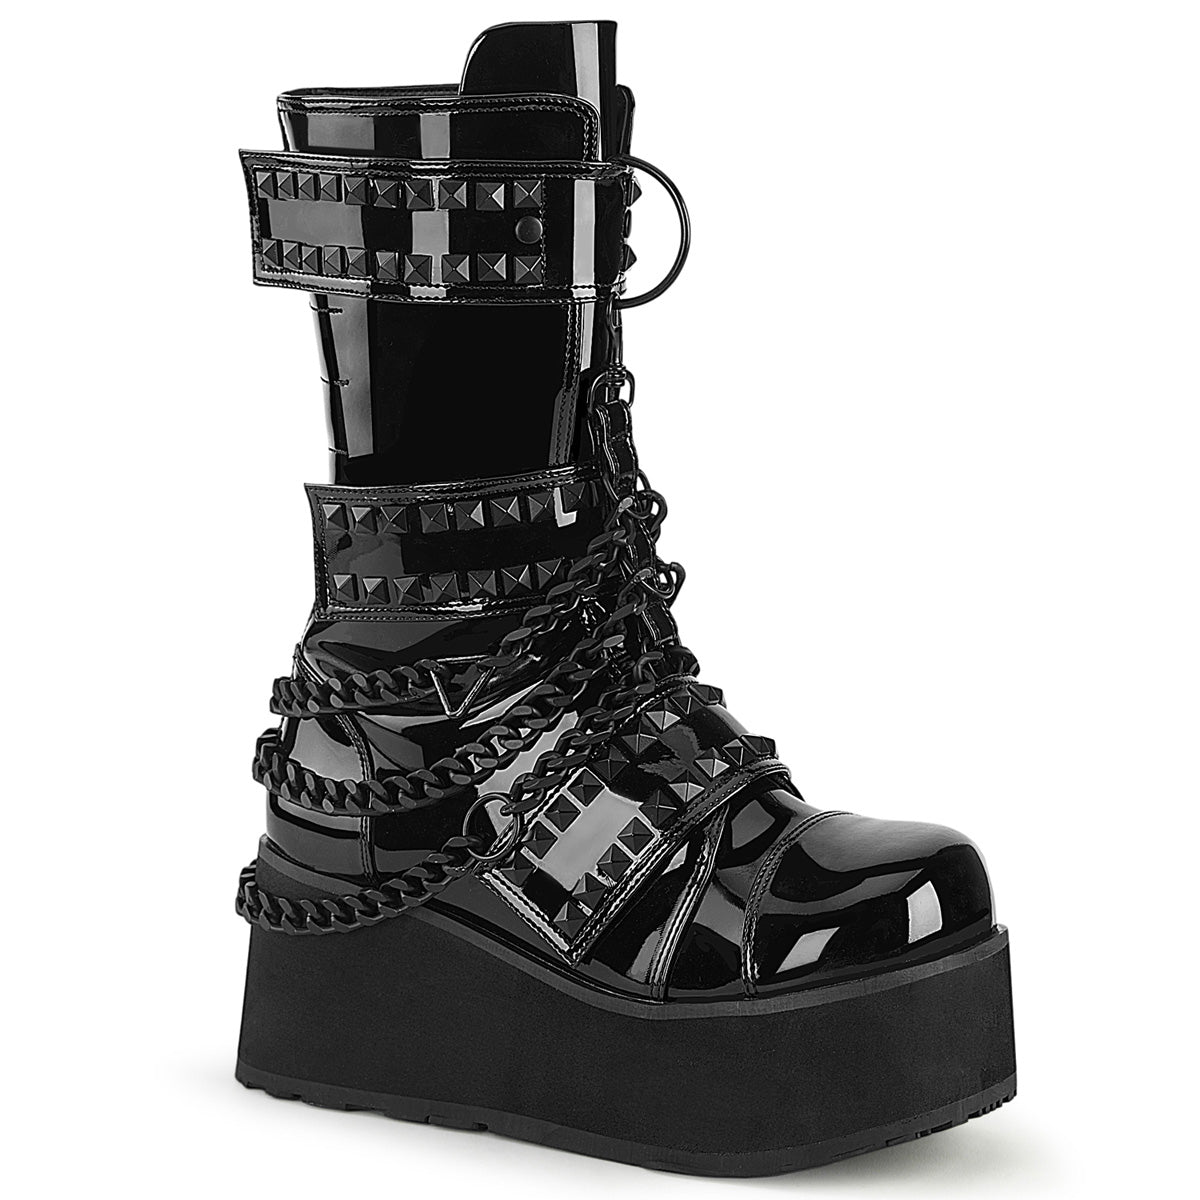 TRASHVILLE-138 Black Patent Mid-Calf Boot Demonia